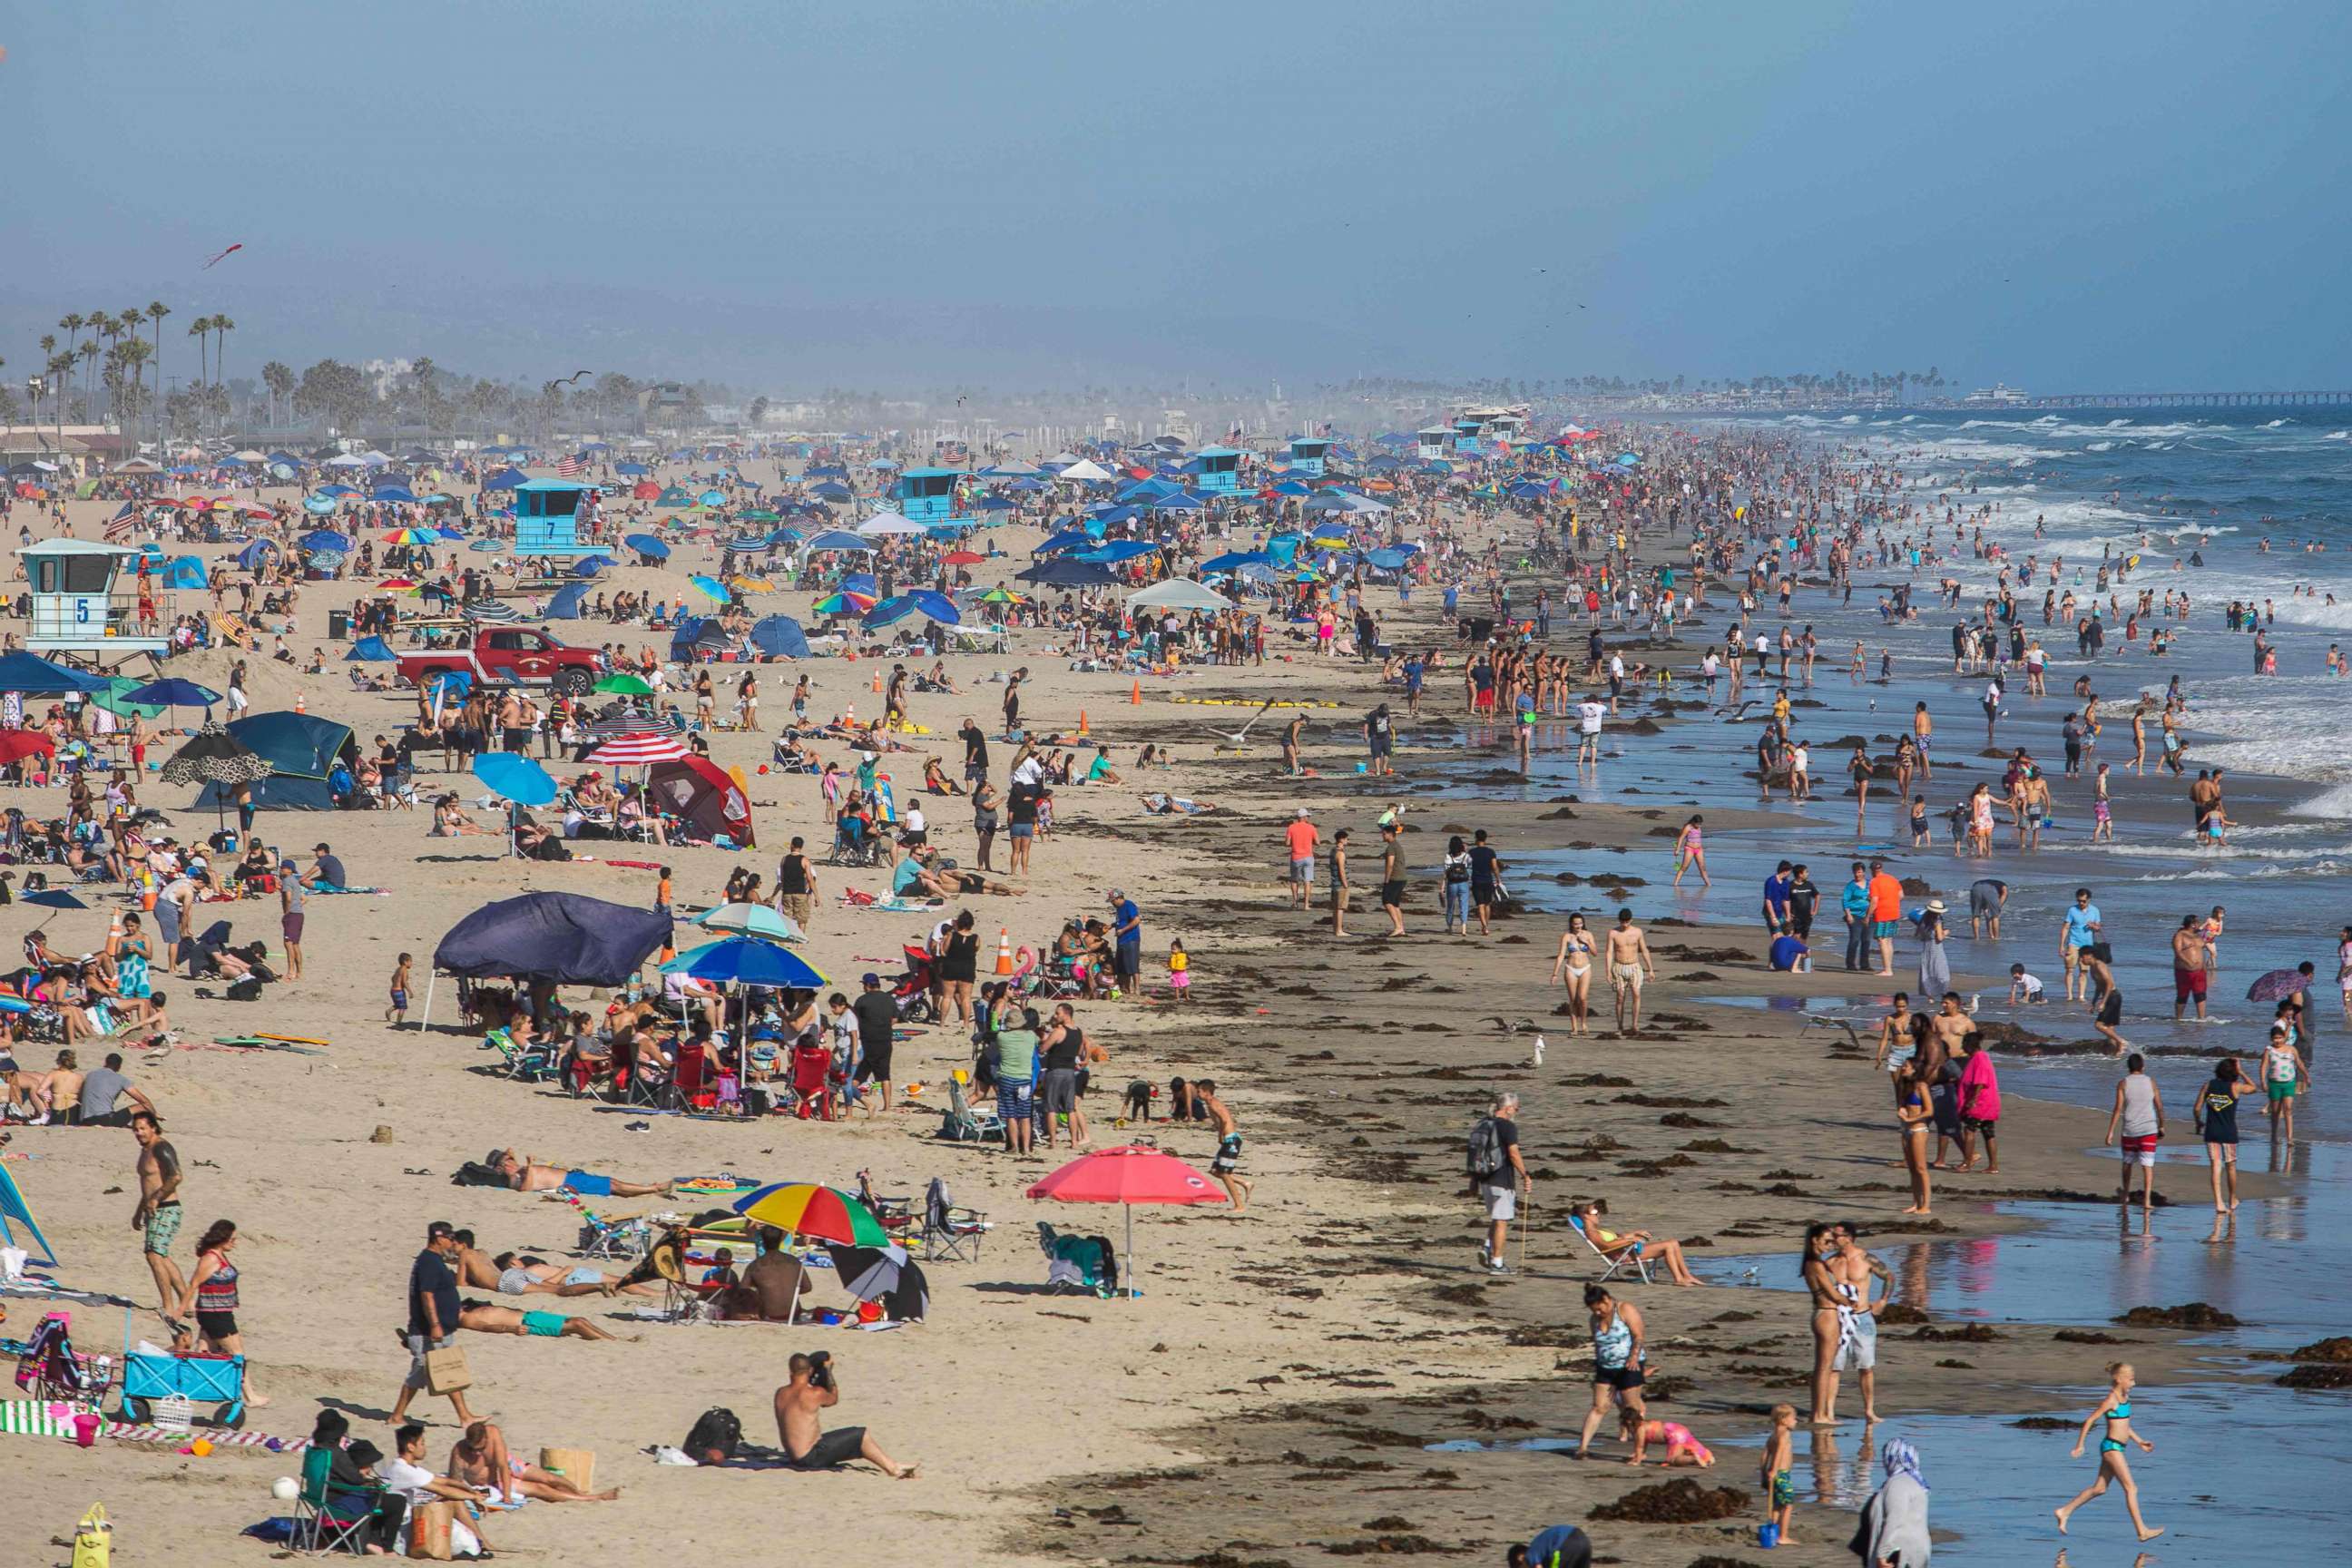 PHOTO: People enjoy the beach amid the coronavirus pandemic in Huntington Beach, Calif., June 14, 2020.